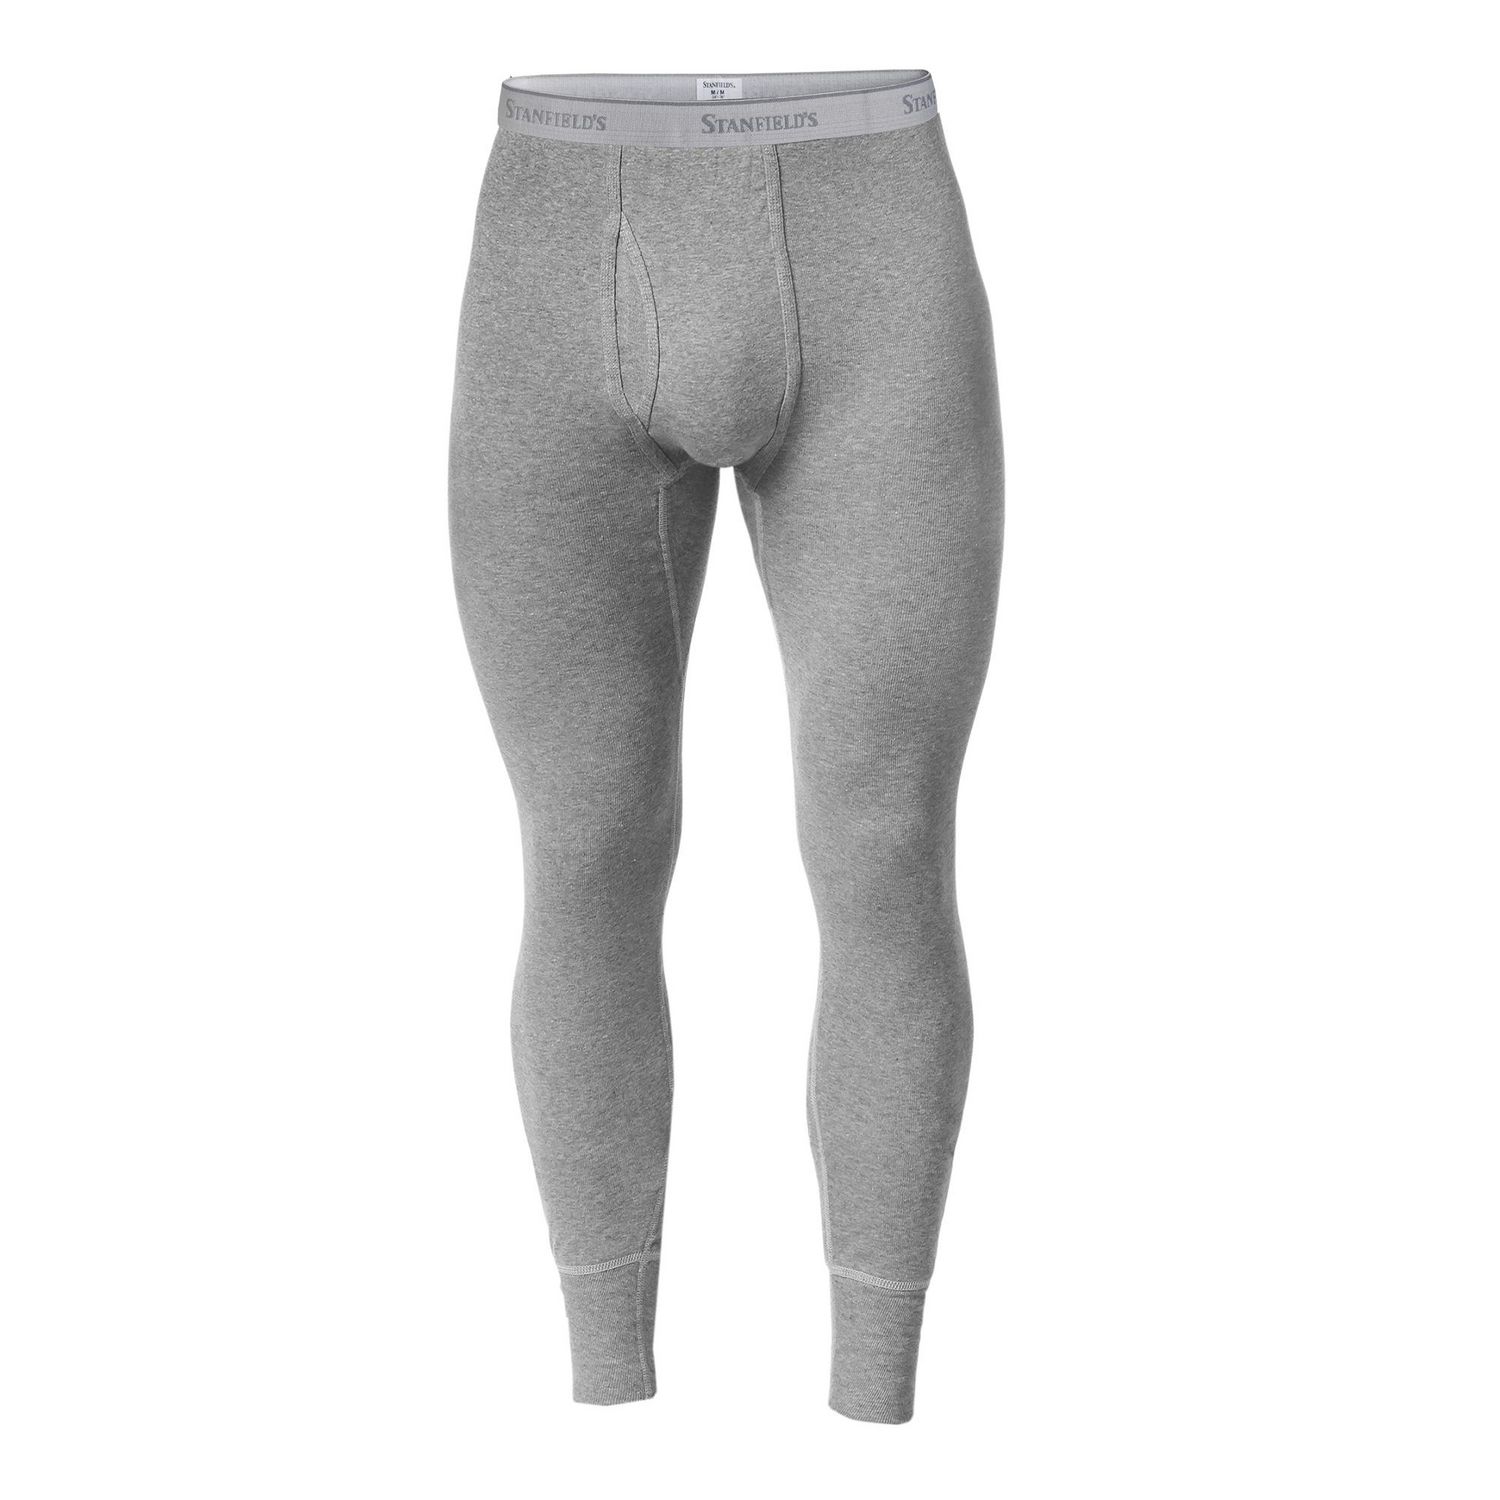 BROSS 100% Cotton Men Thermal Leggings, Men's Thermal Underwear